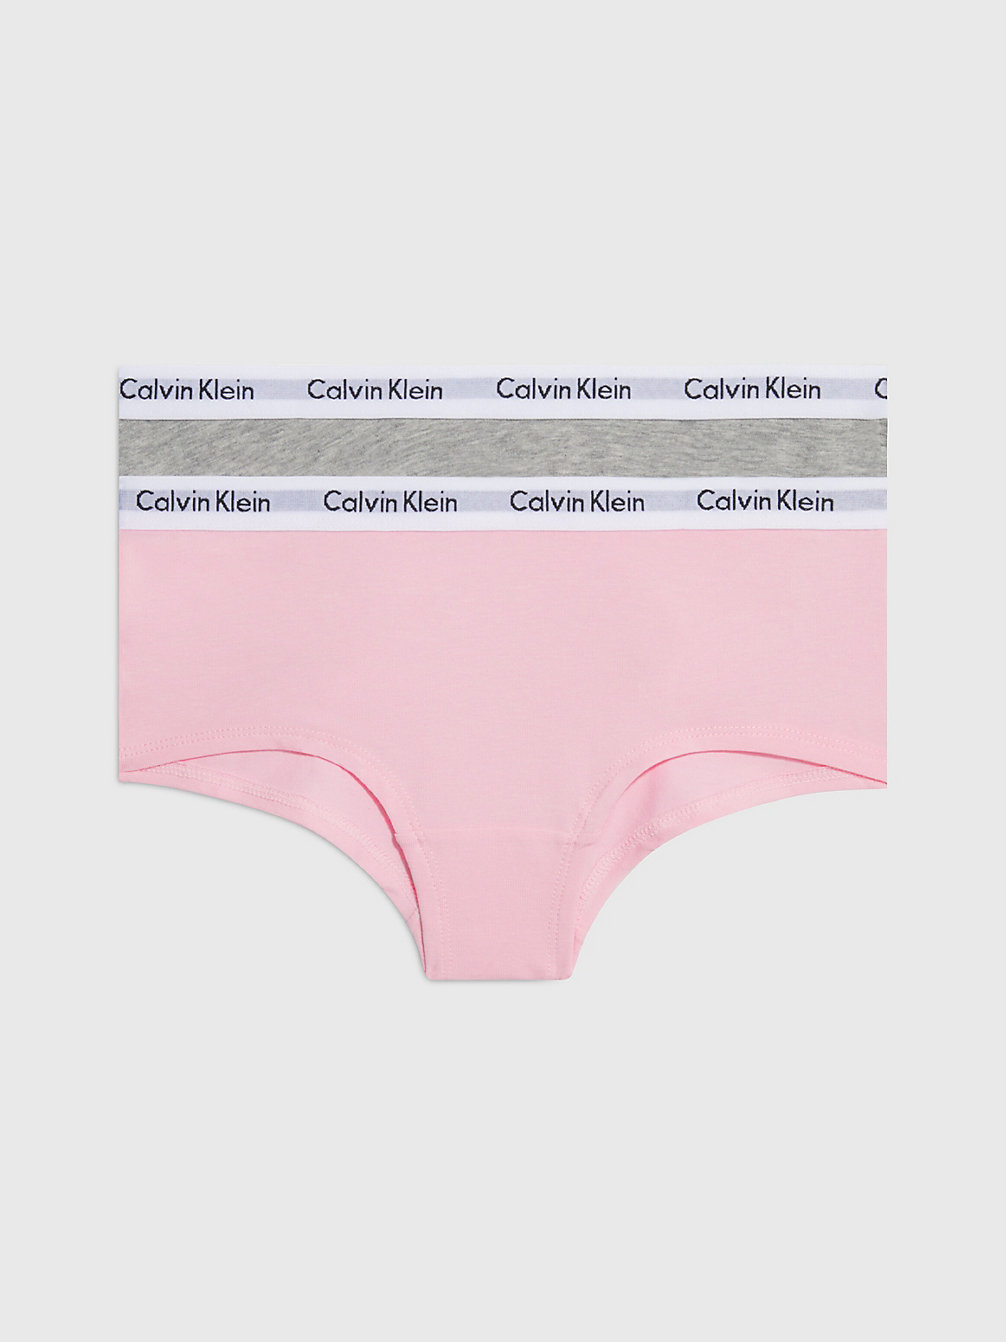 GREY HTR/UNIQUE 2 Pack Girls Hipster Panties - Modern Cotton undefined girls Calvin Klein